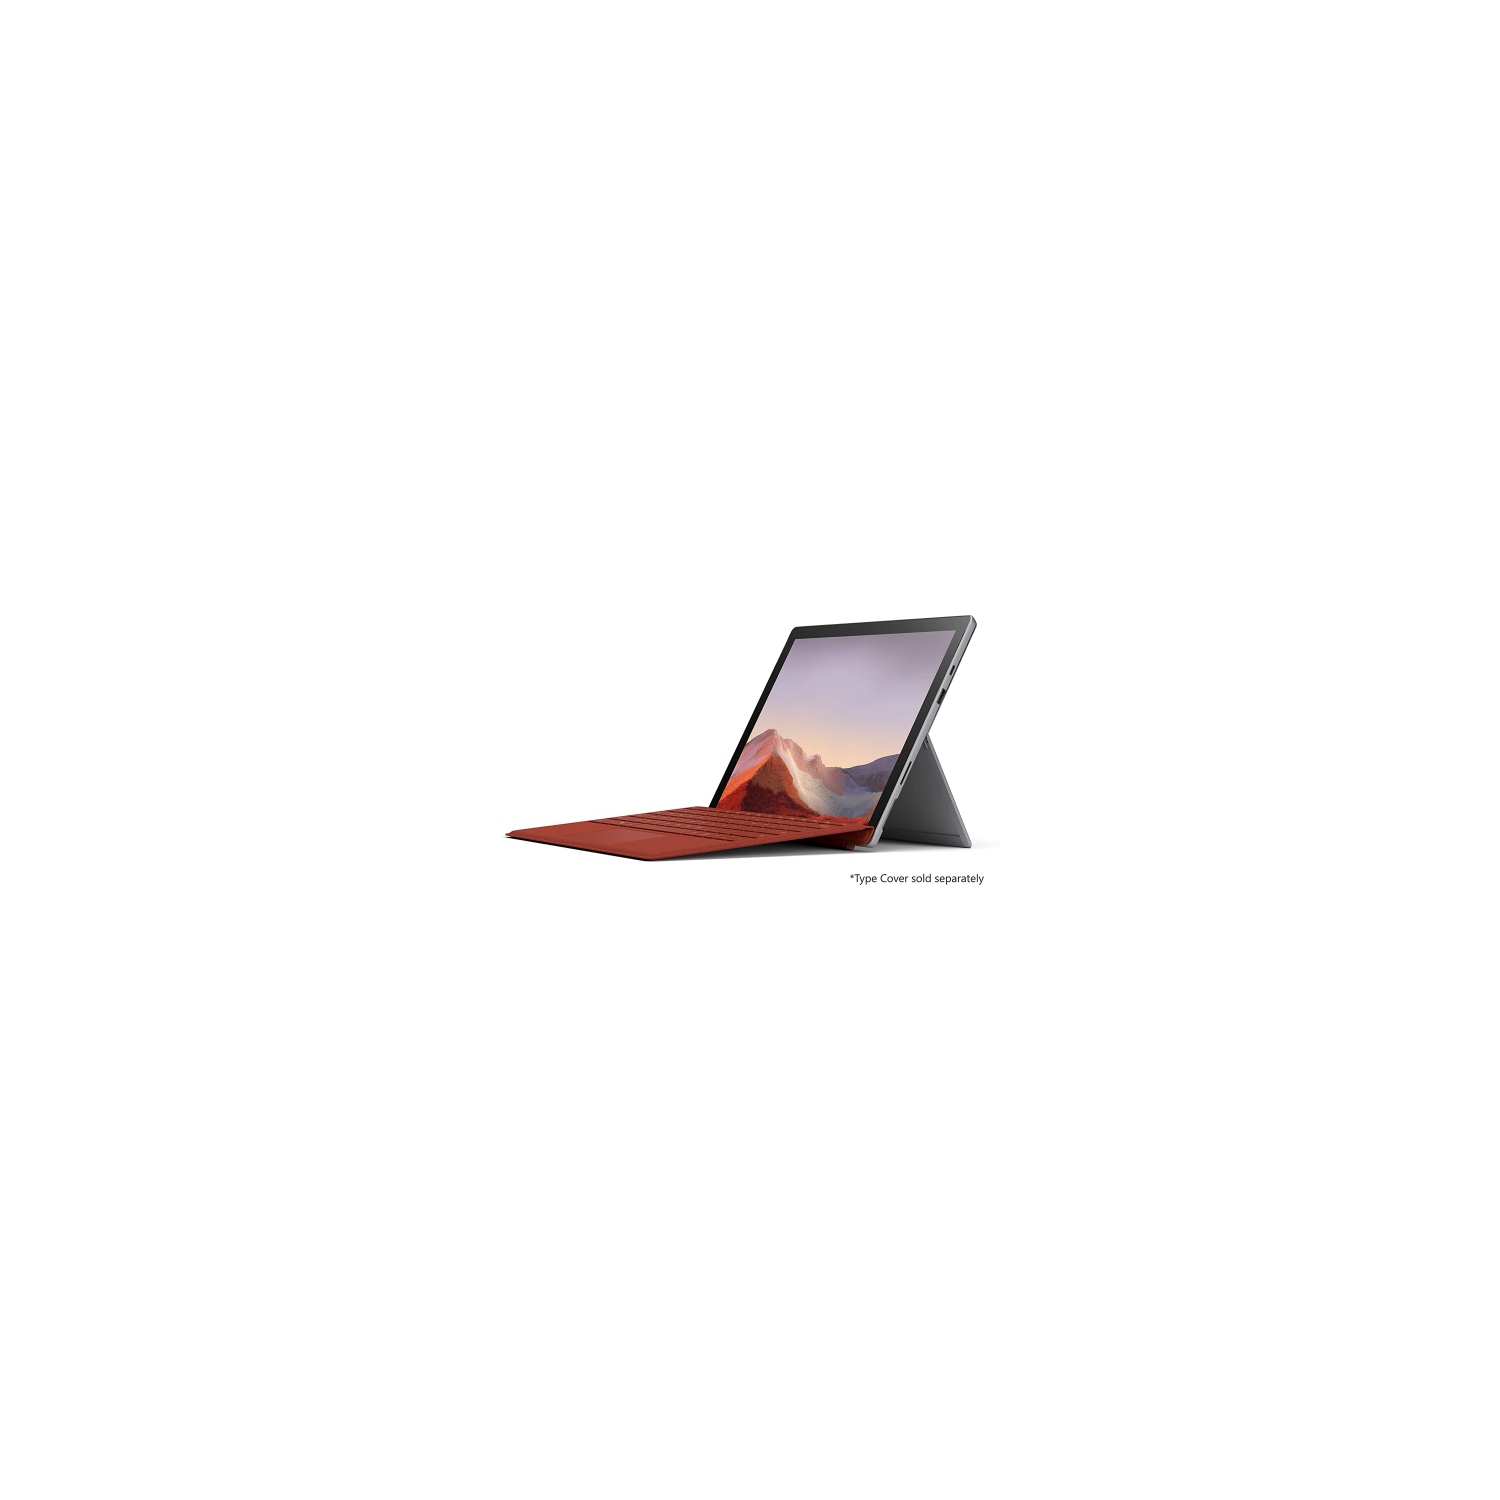 Open Box - Microsoft Surface Pro 7 12.3" Windows 10 Tablet -Platinum (Intel Core i3/4 GB RAM/128 GB/ Win 10 Home)